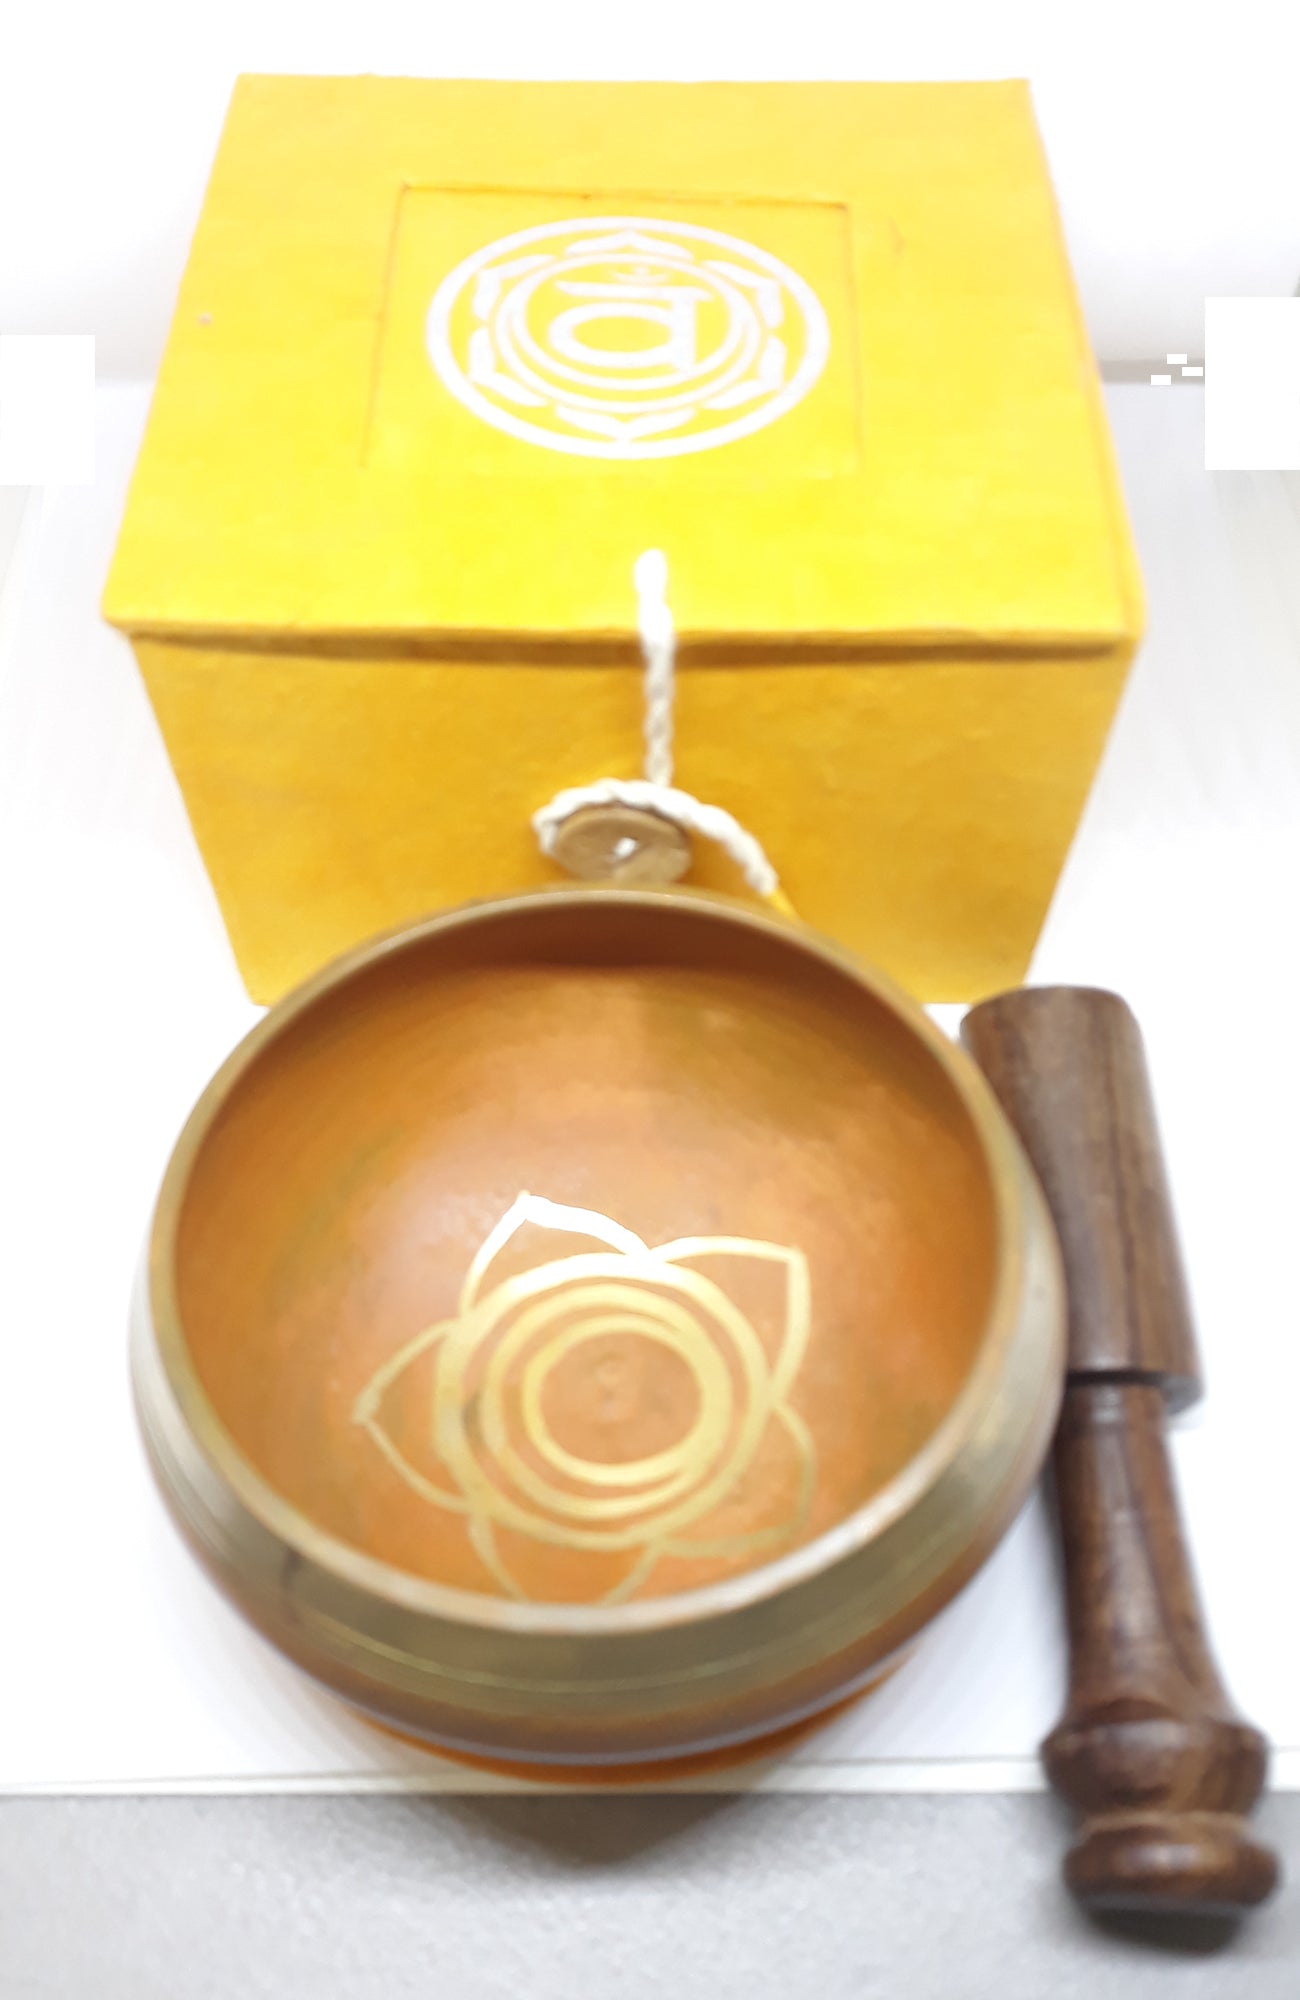 Chakra Singing Bowl - Sacral:  approx. 3.5” diameter